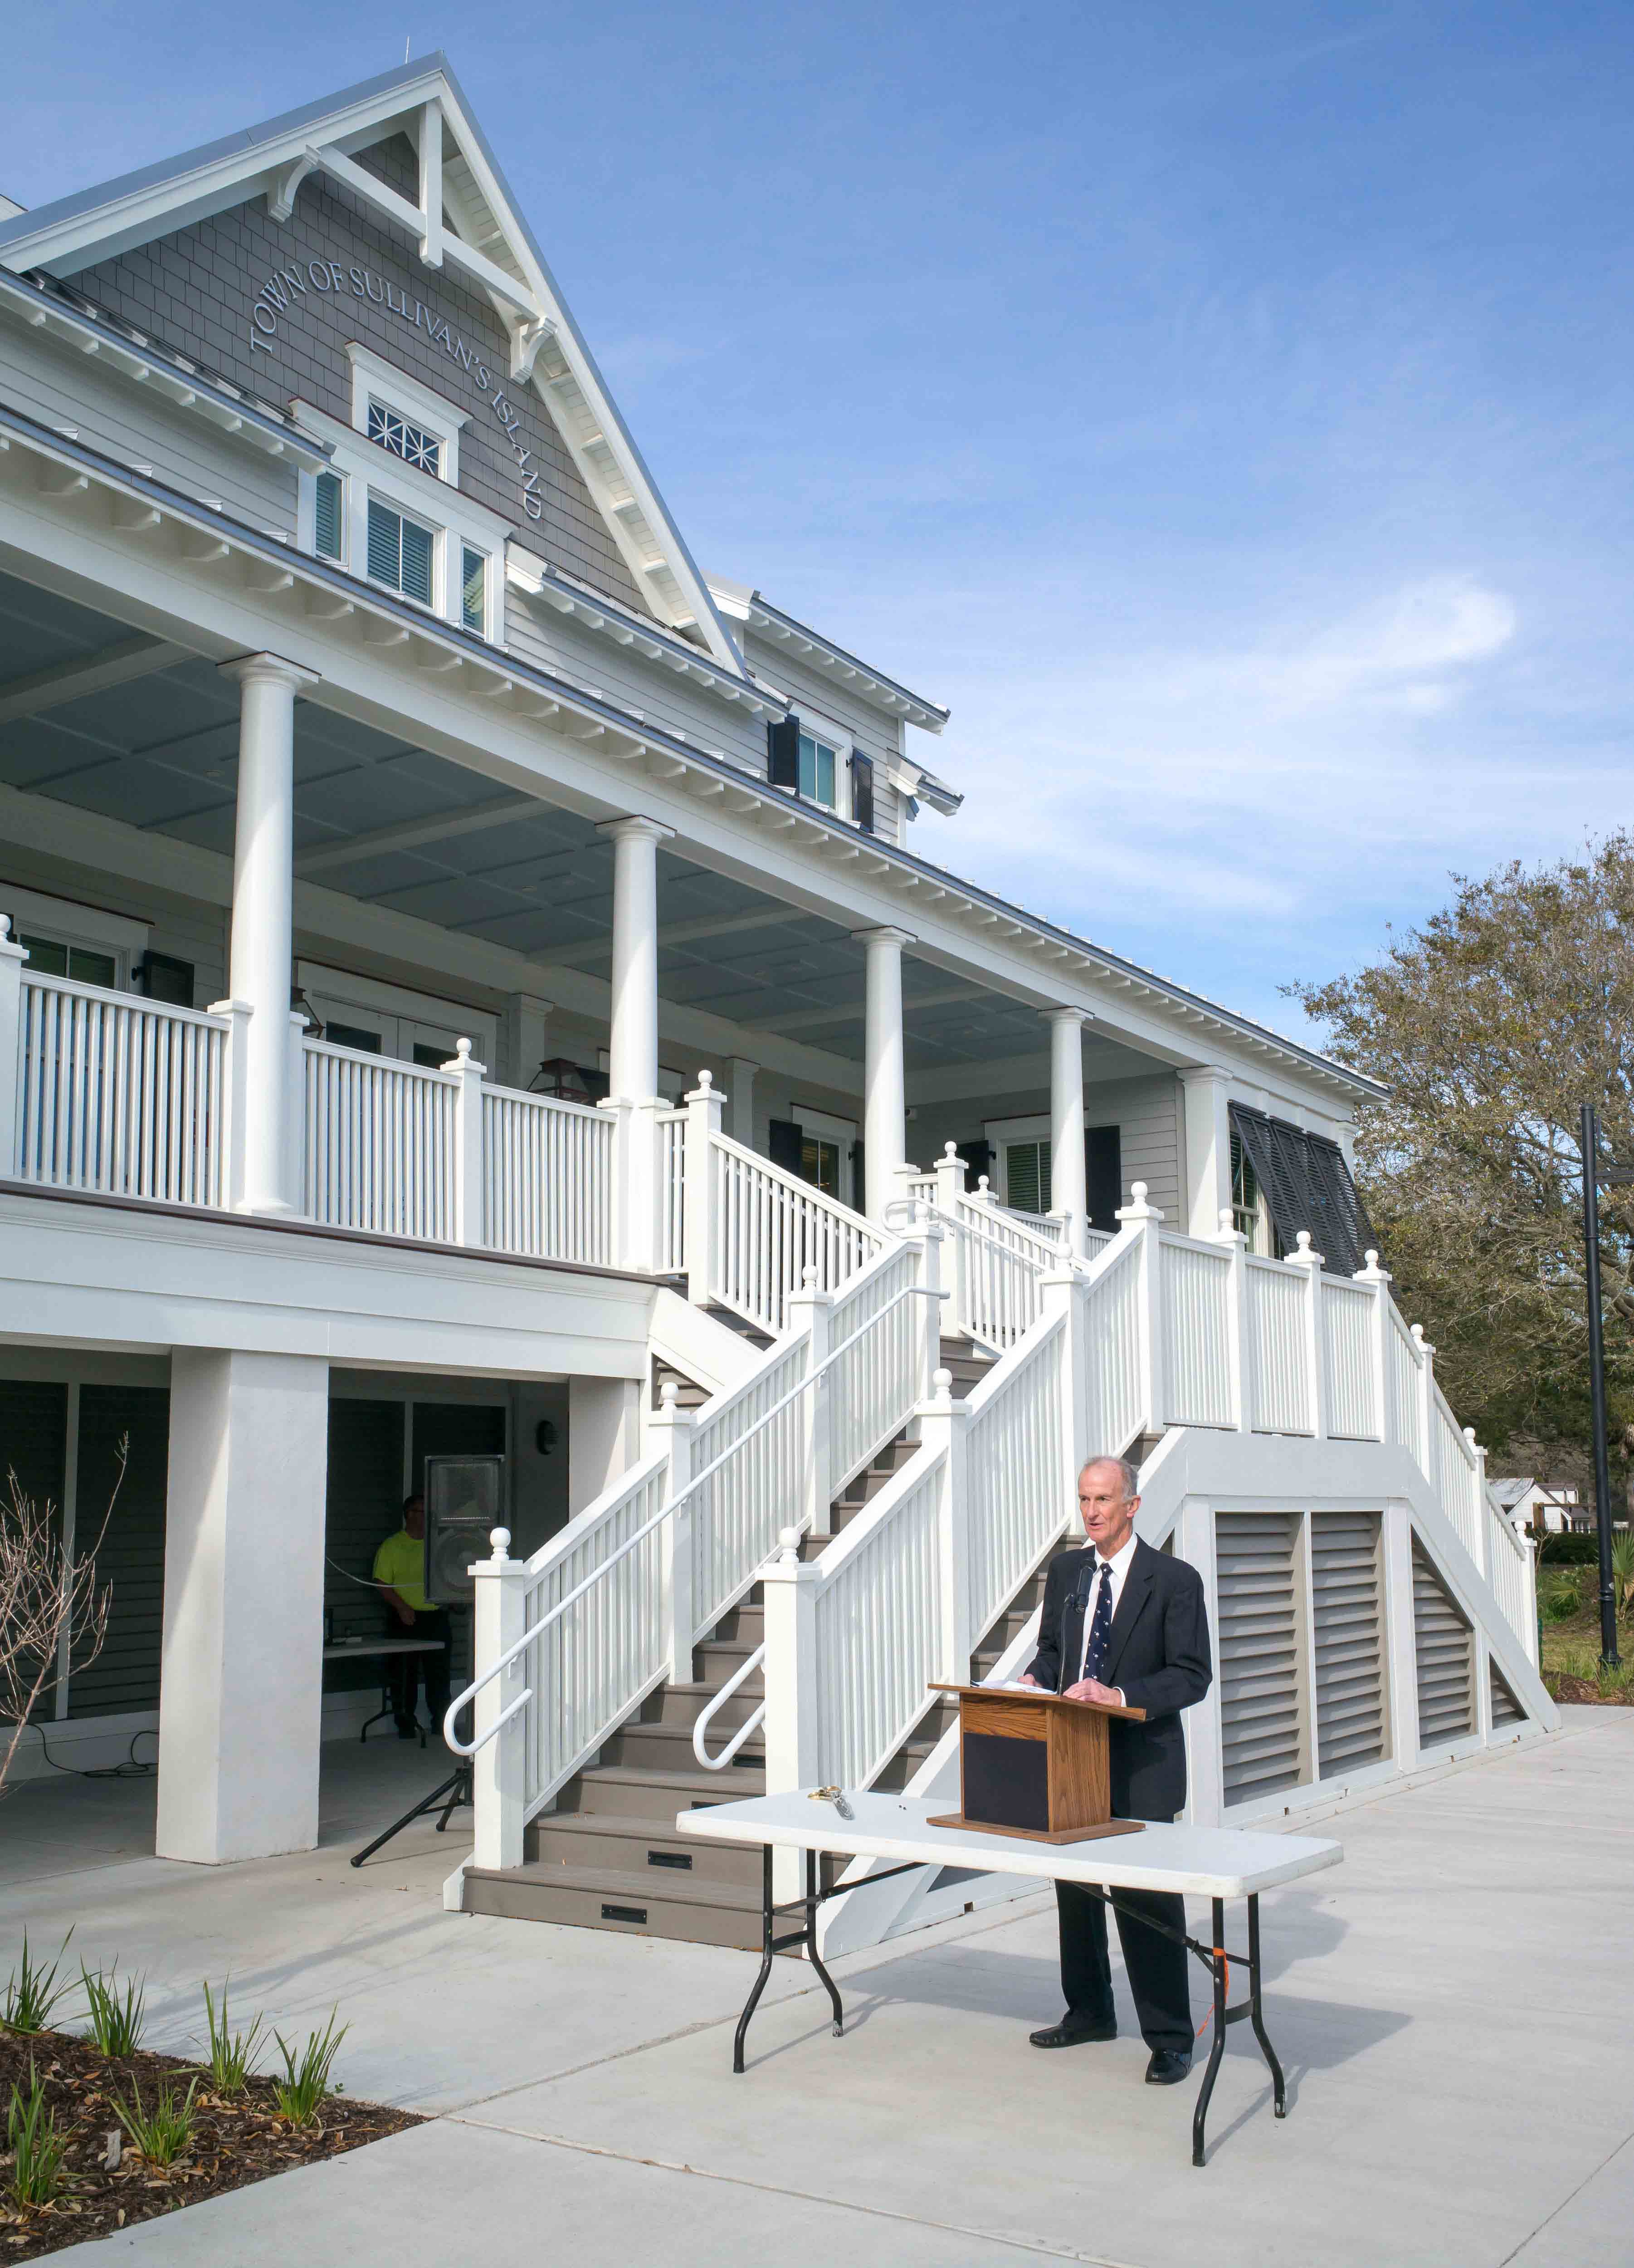 Exterior of Sullivan's Island Town Hall with man at podium